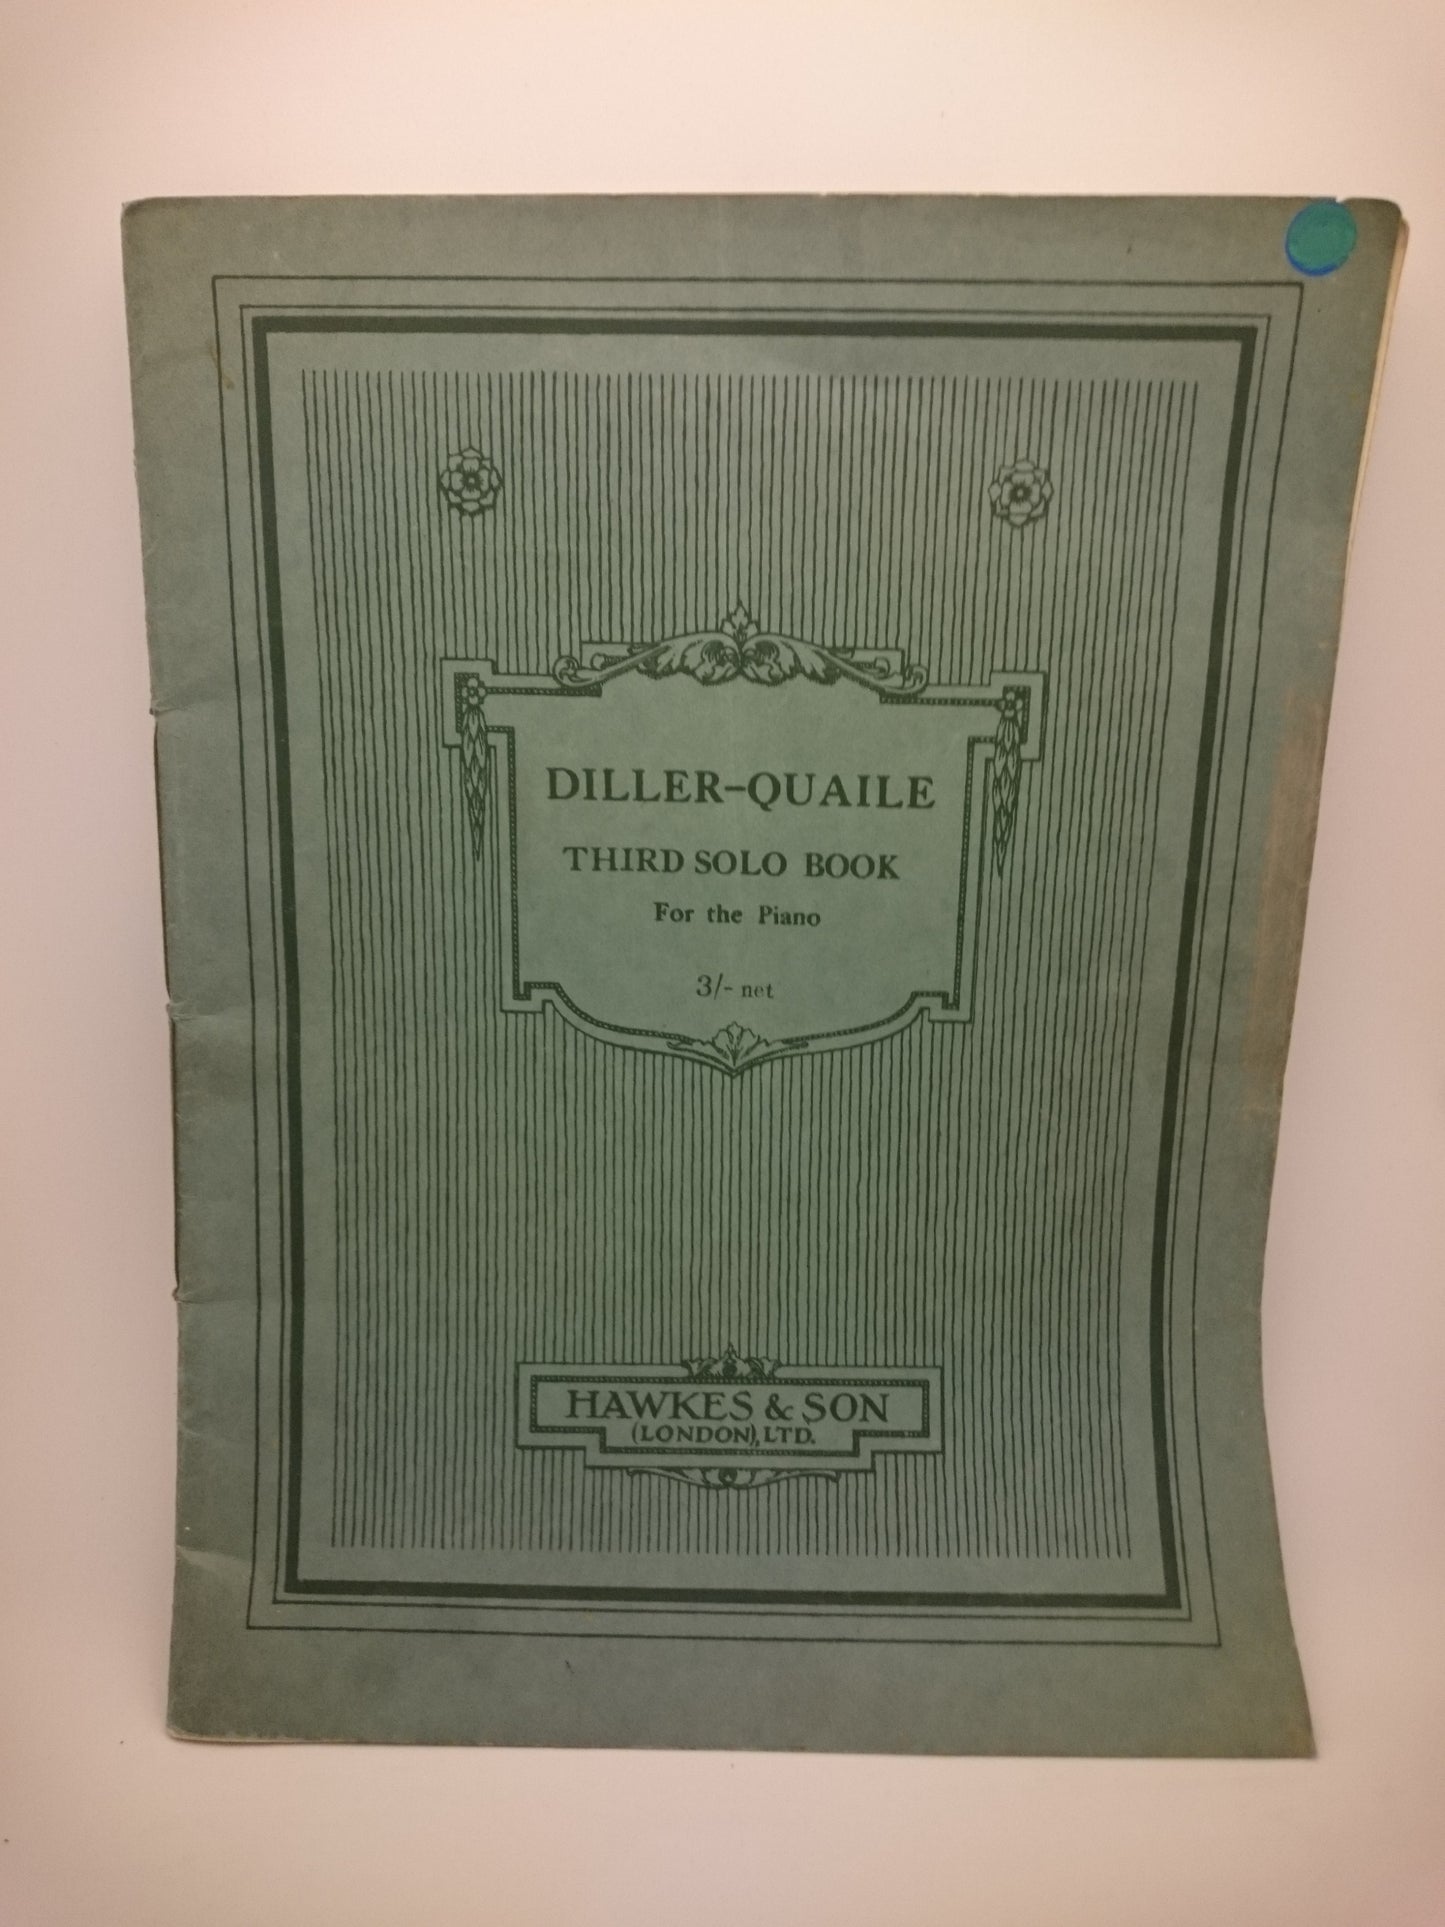 Diller-Quaile Third Solo Book for the Piano